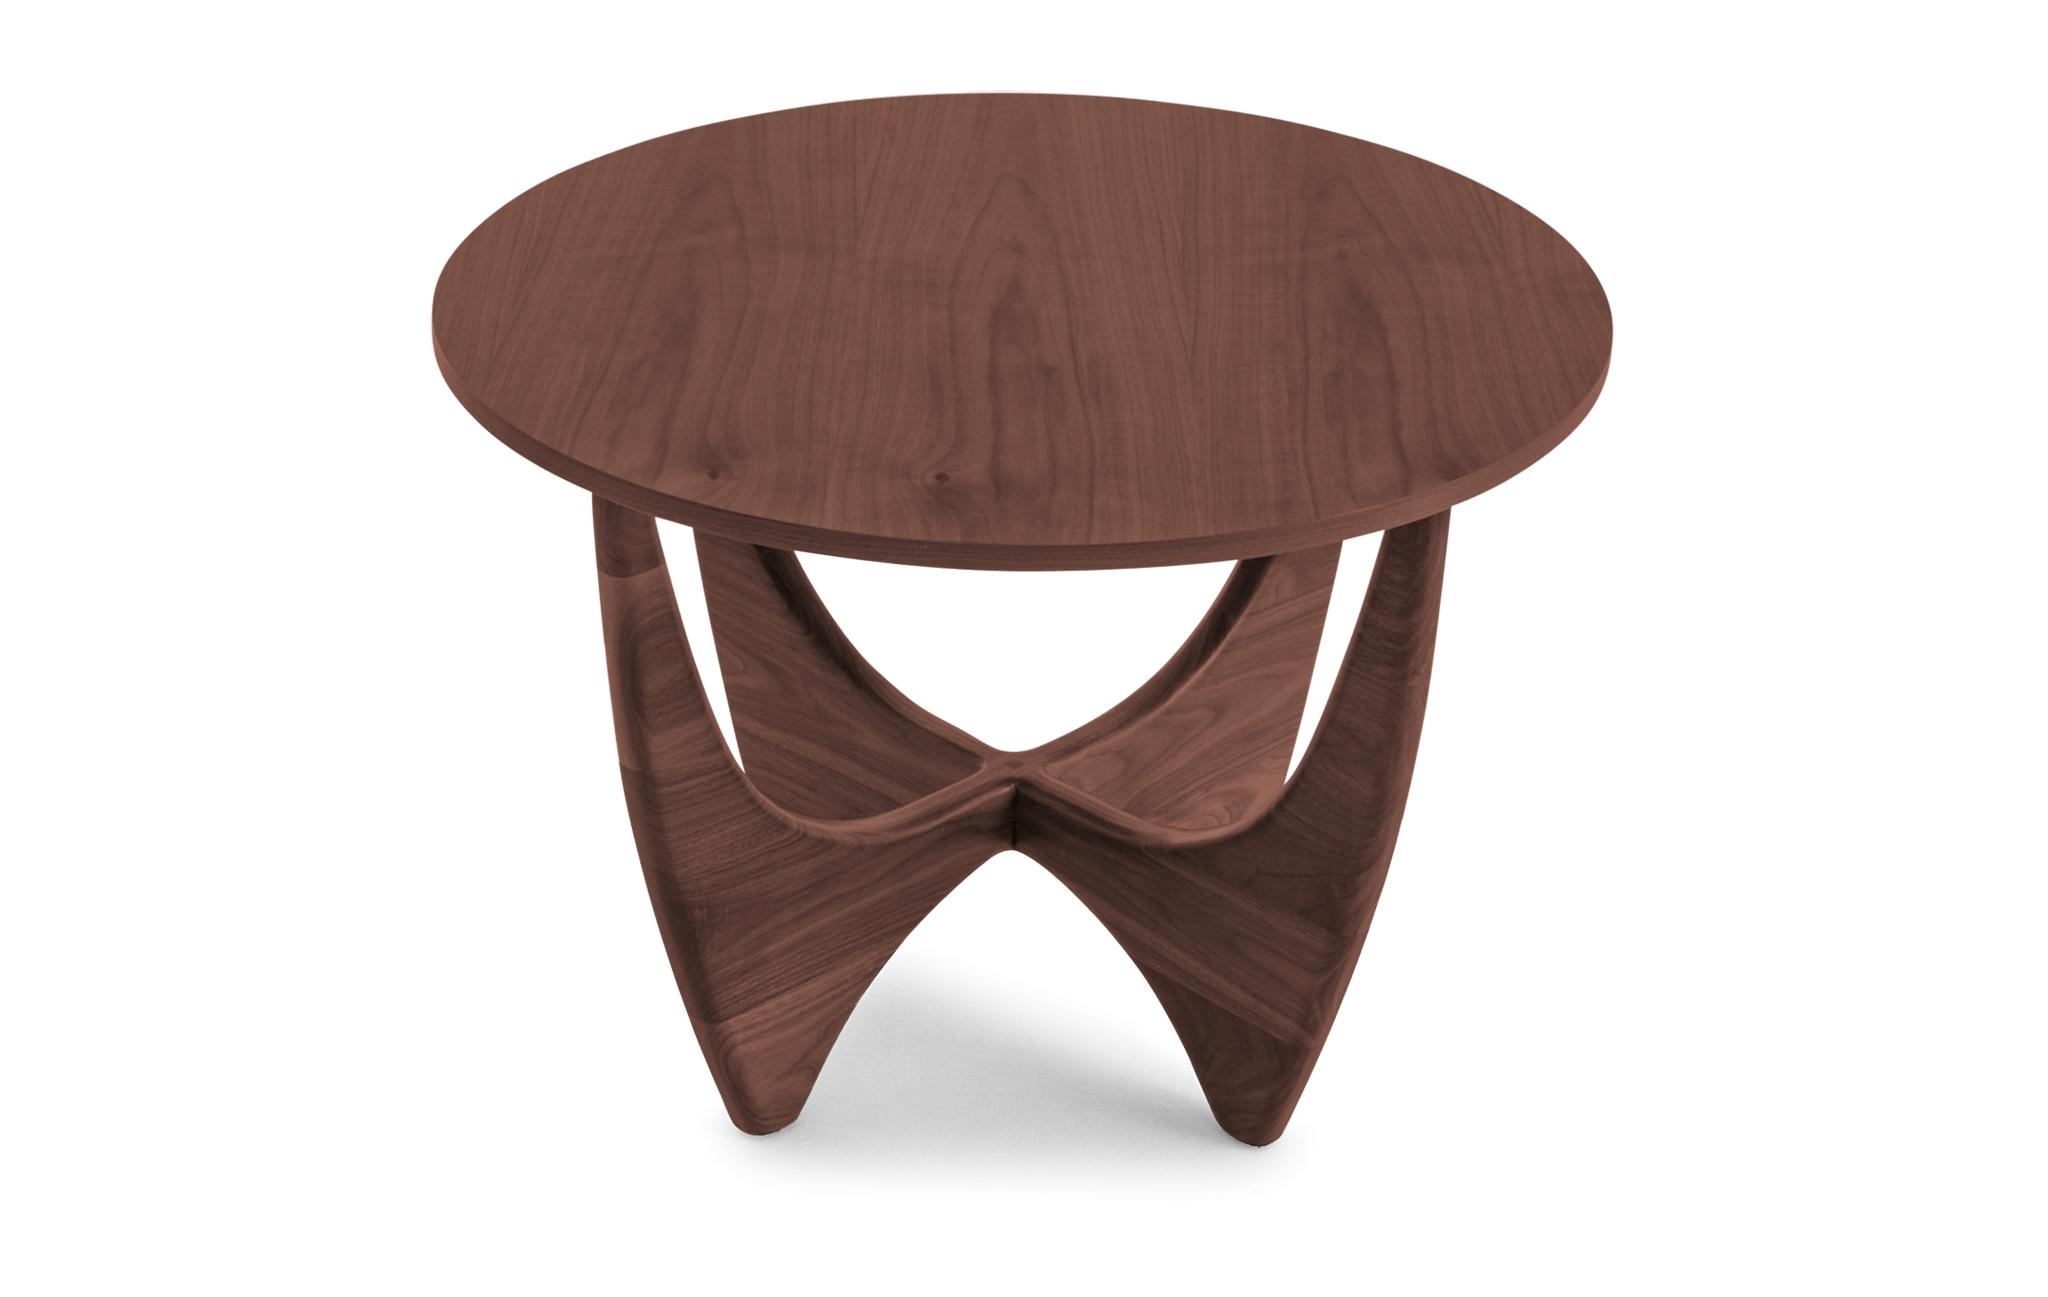 Stern Mid Century Modern (Wood Top) End Table - Walnut - Image 1